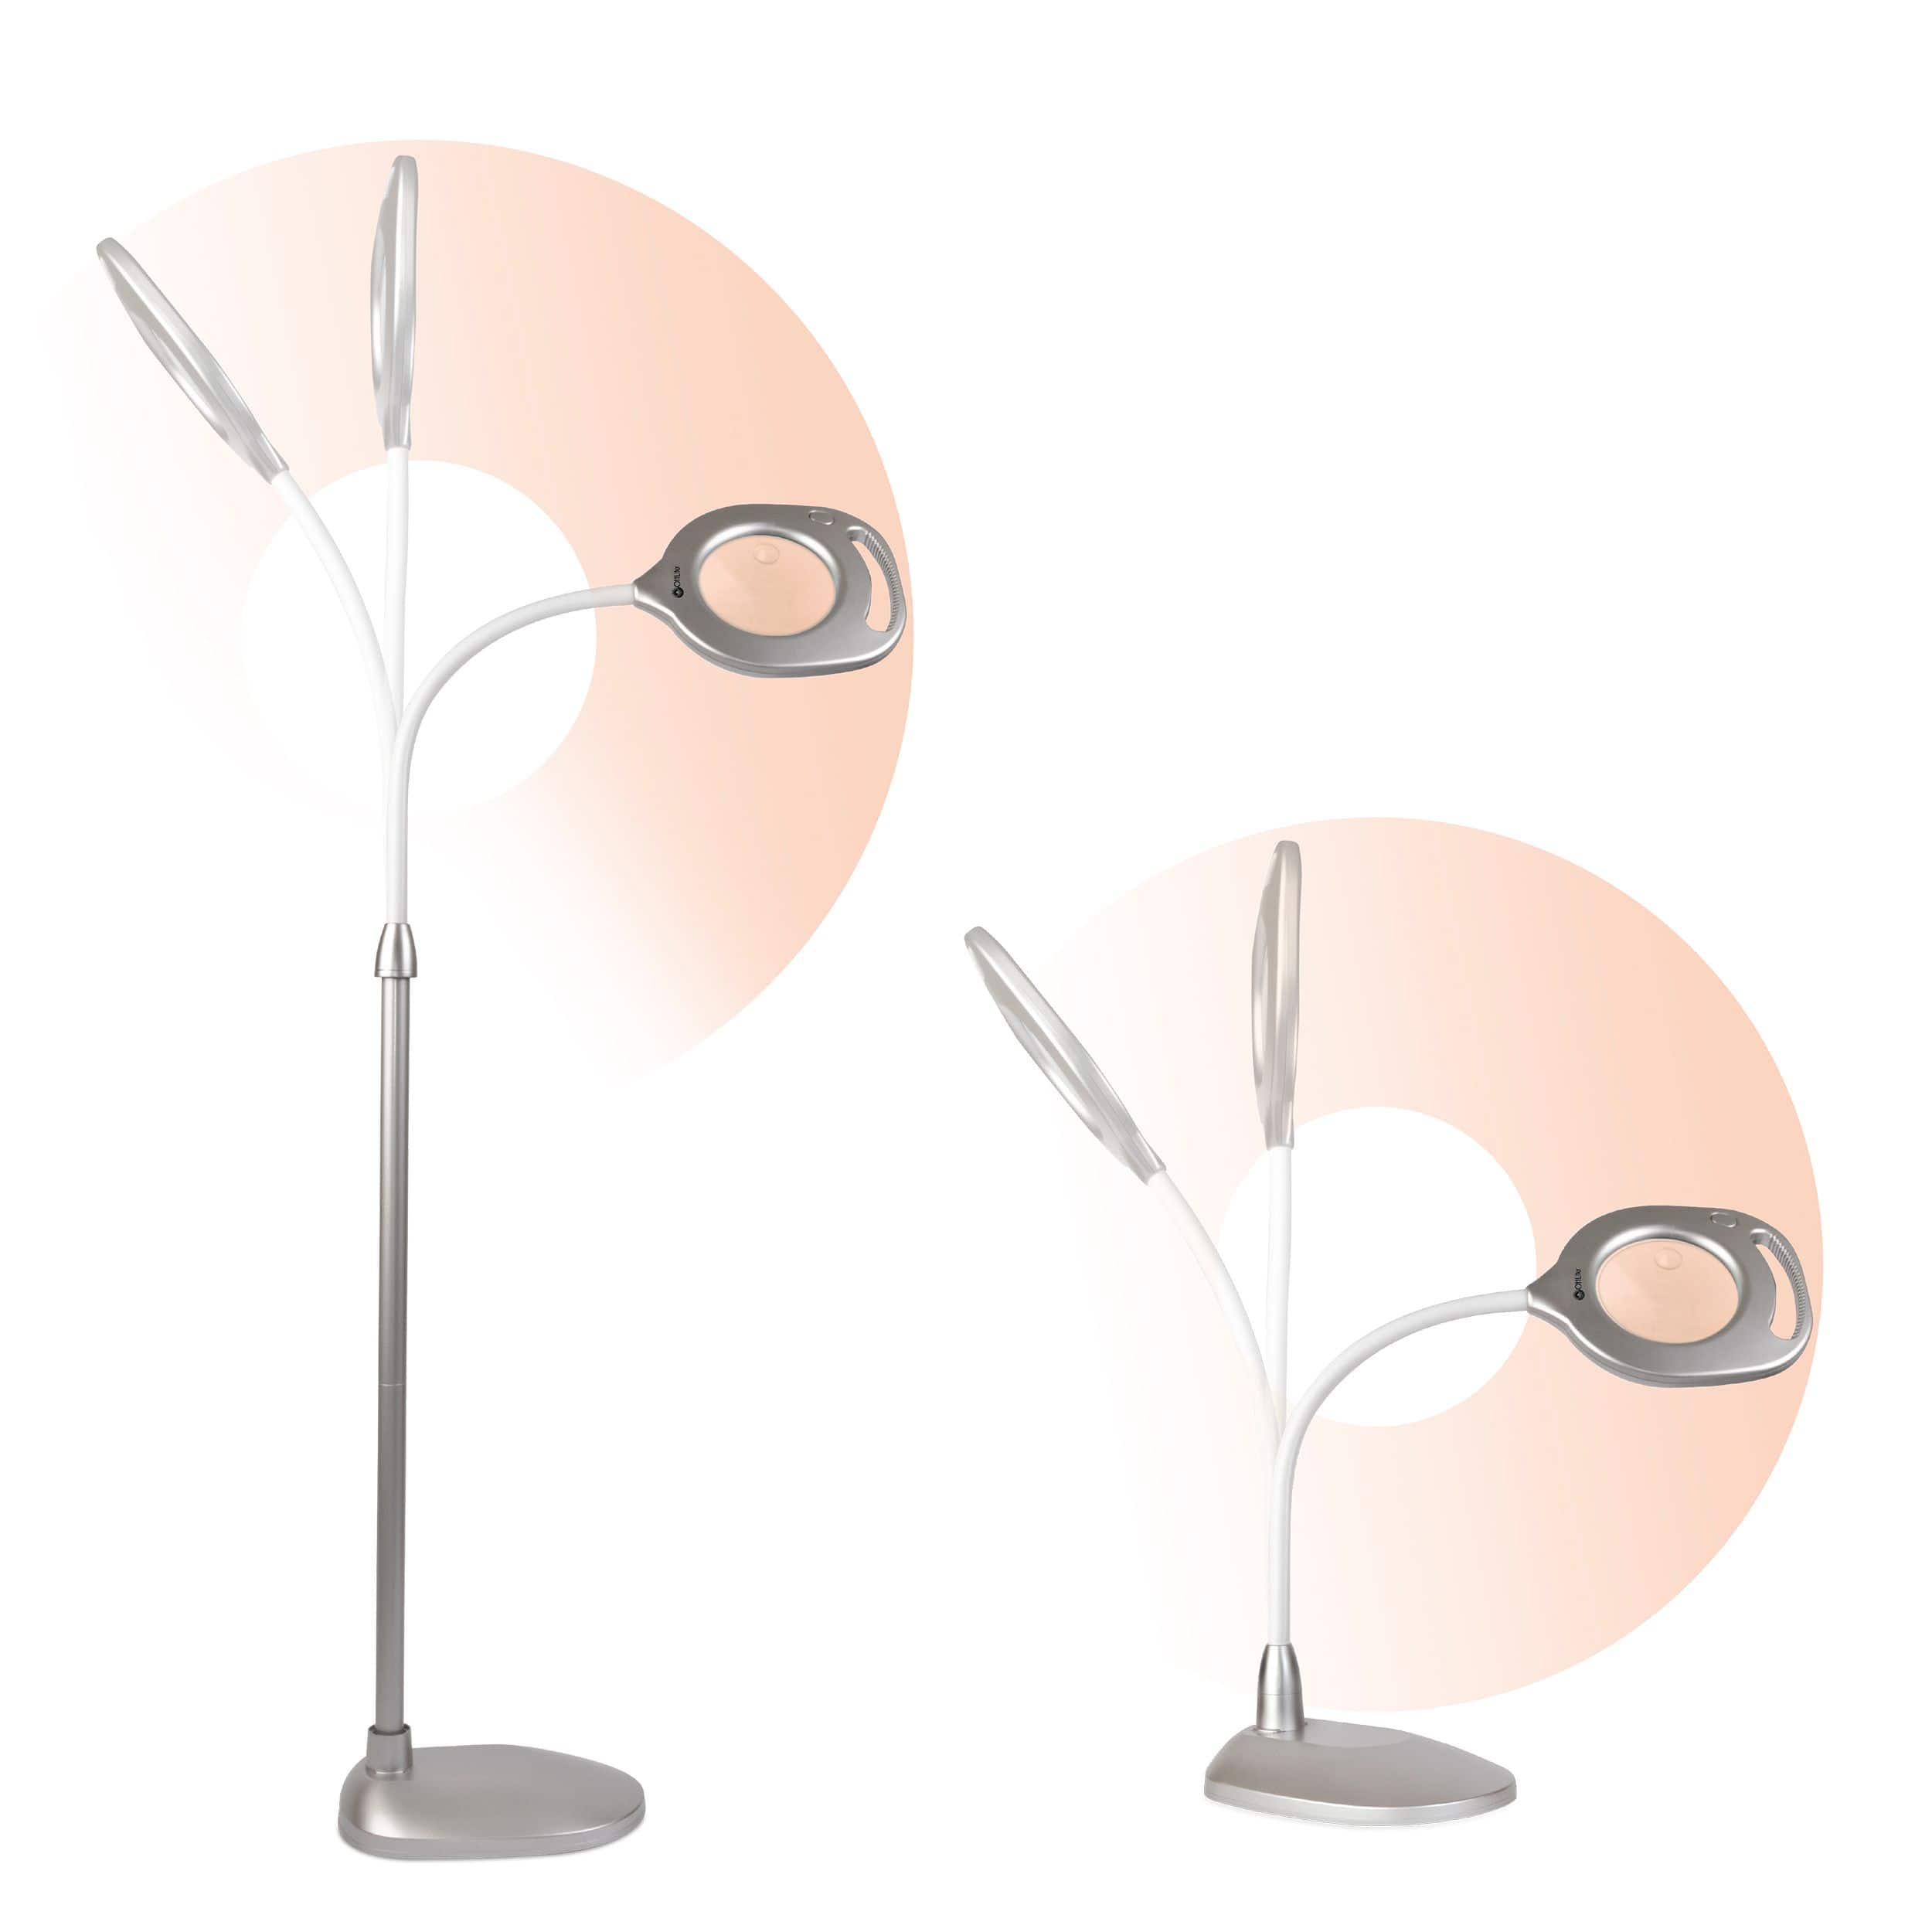 Ottlite Magnifying Light and Floor Lamp - household items - by